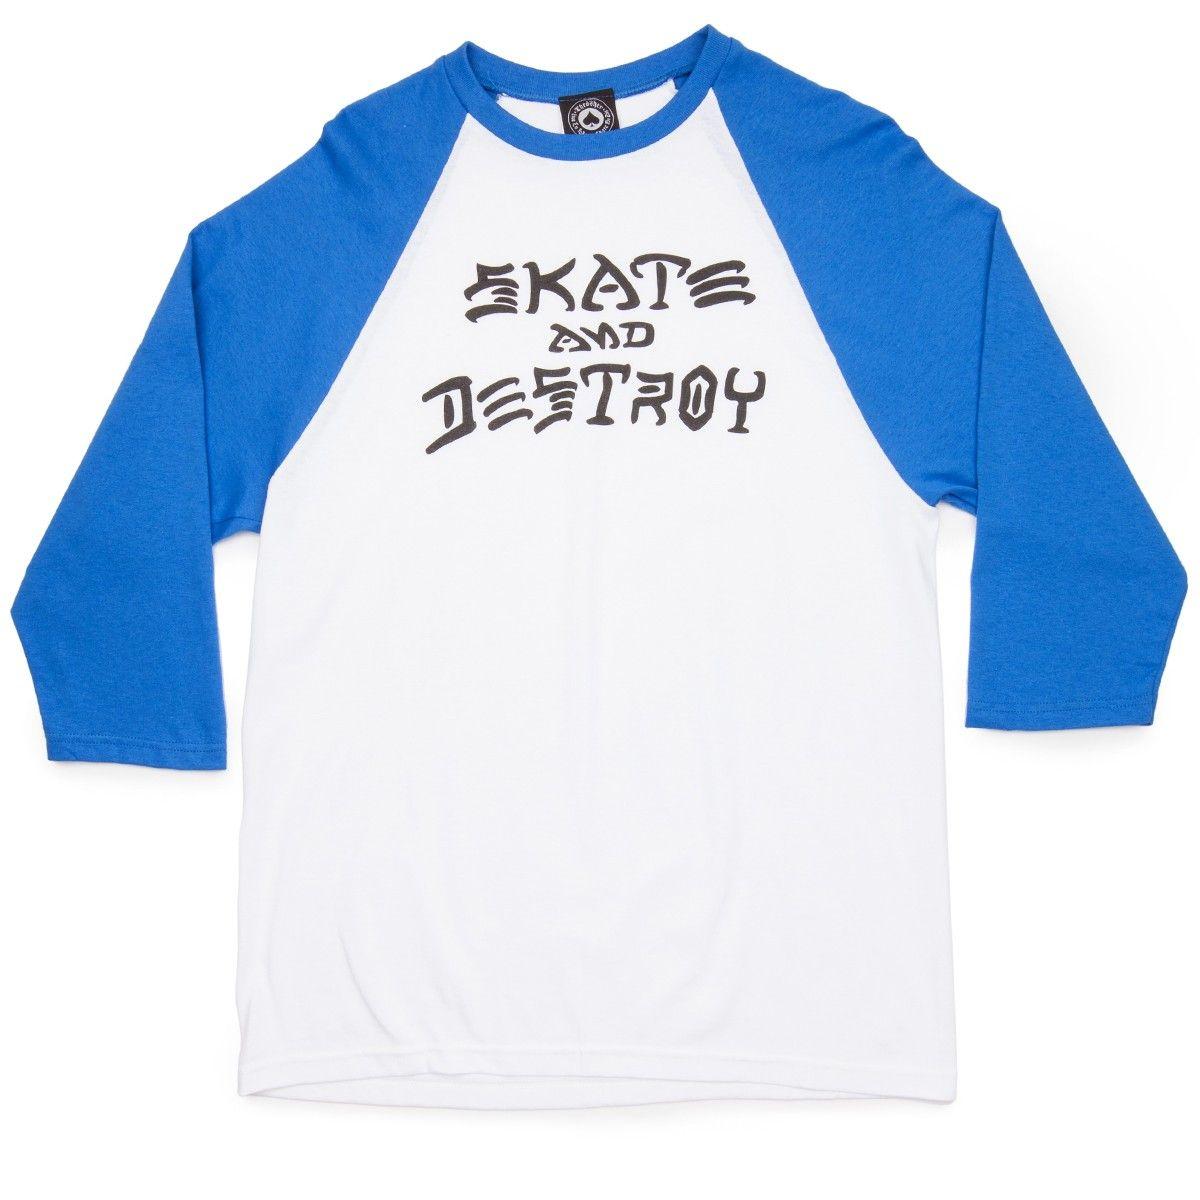 Whit and Blue Thrasher Logo - Thrasher Skate And Destoy Raglan T-Shirt - White/Blue